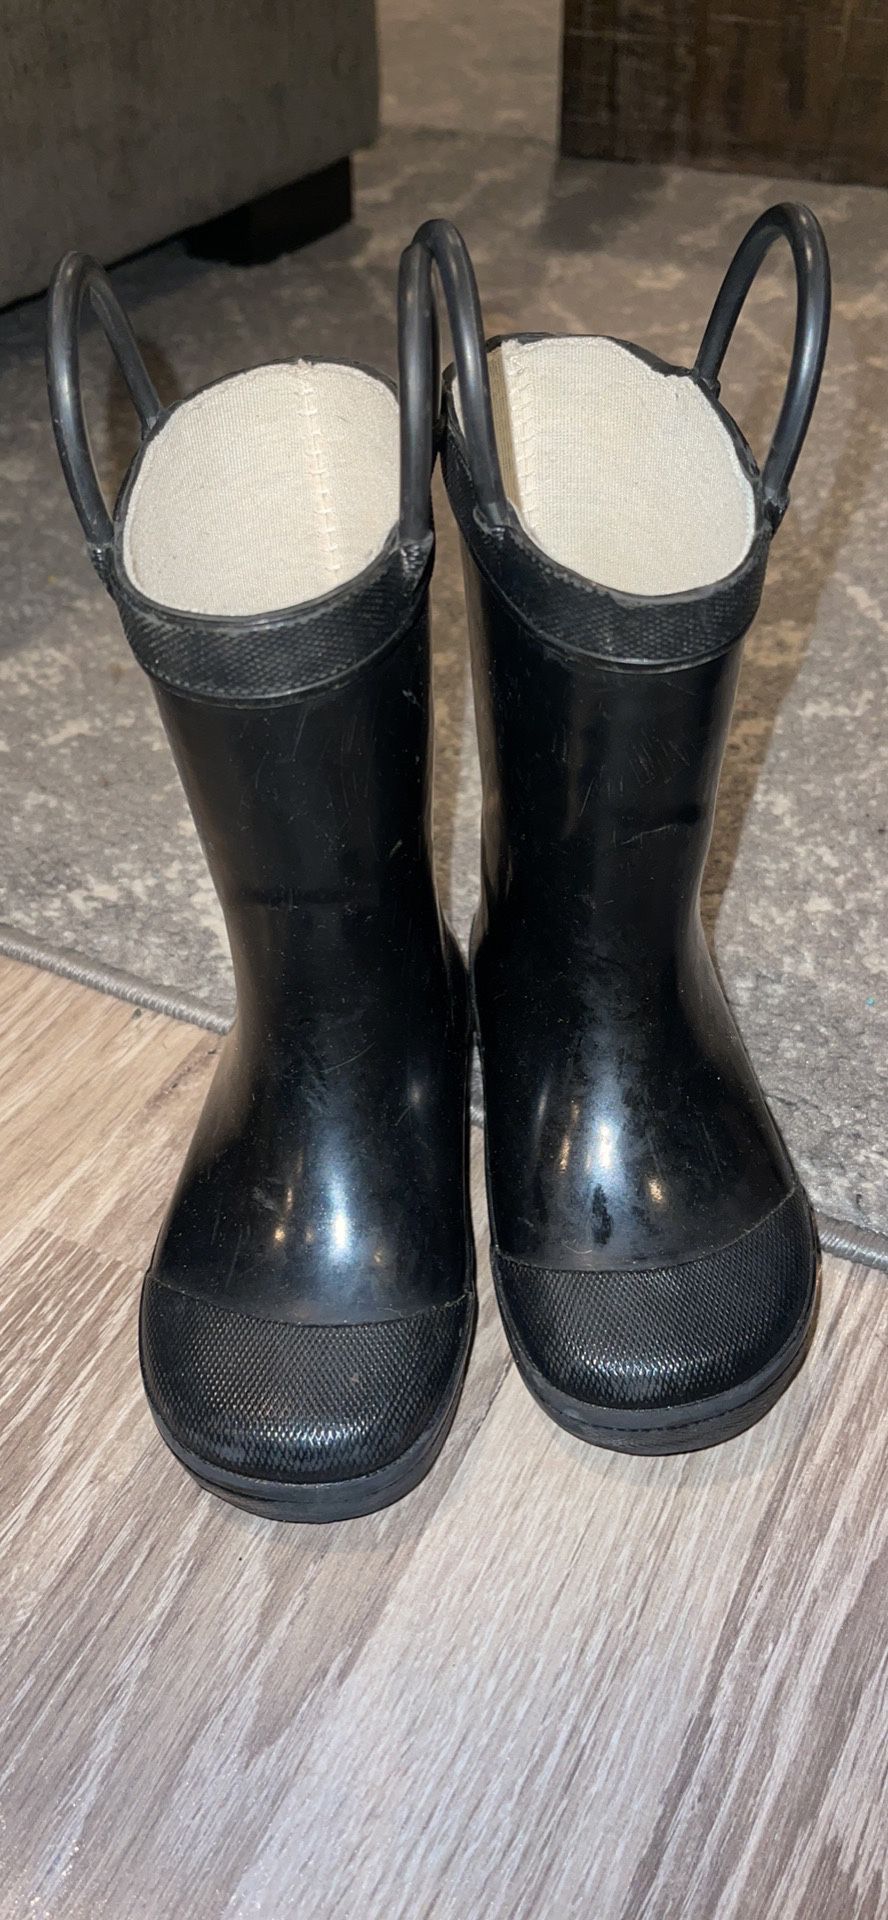 Toddler Boys Black Rain Boots Size 7